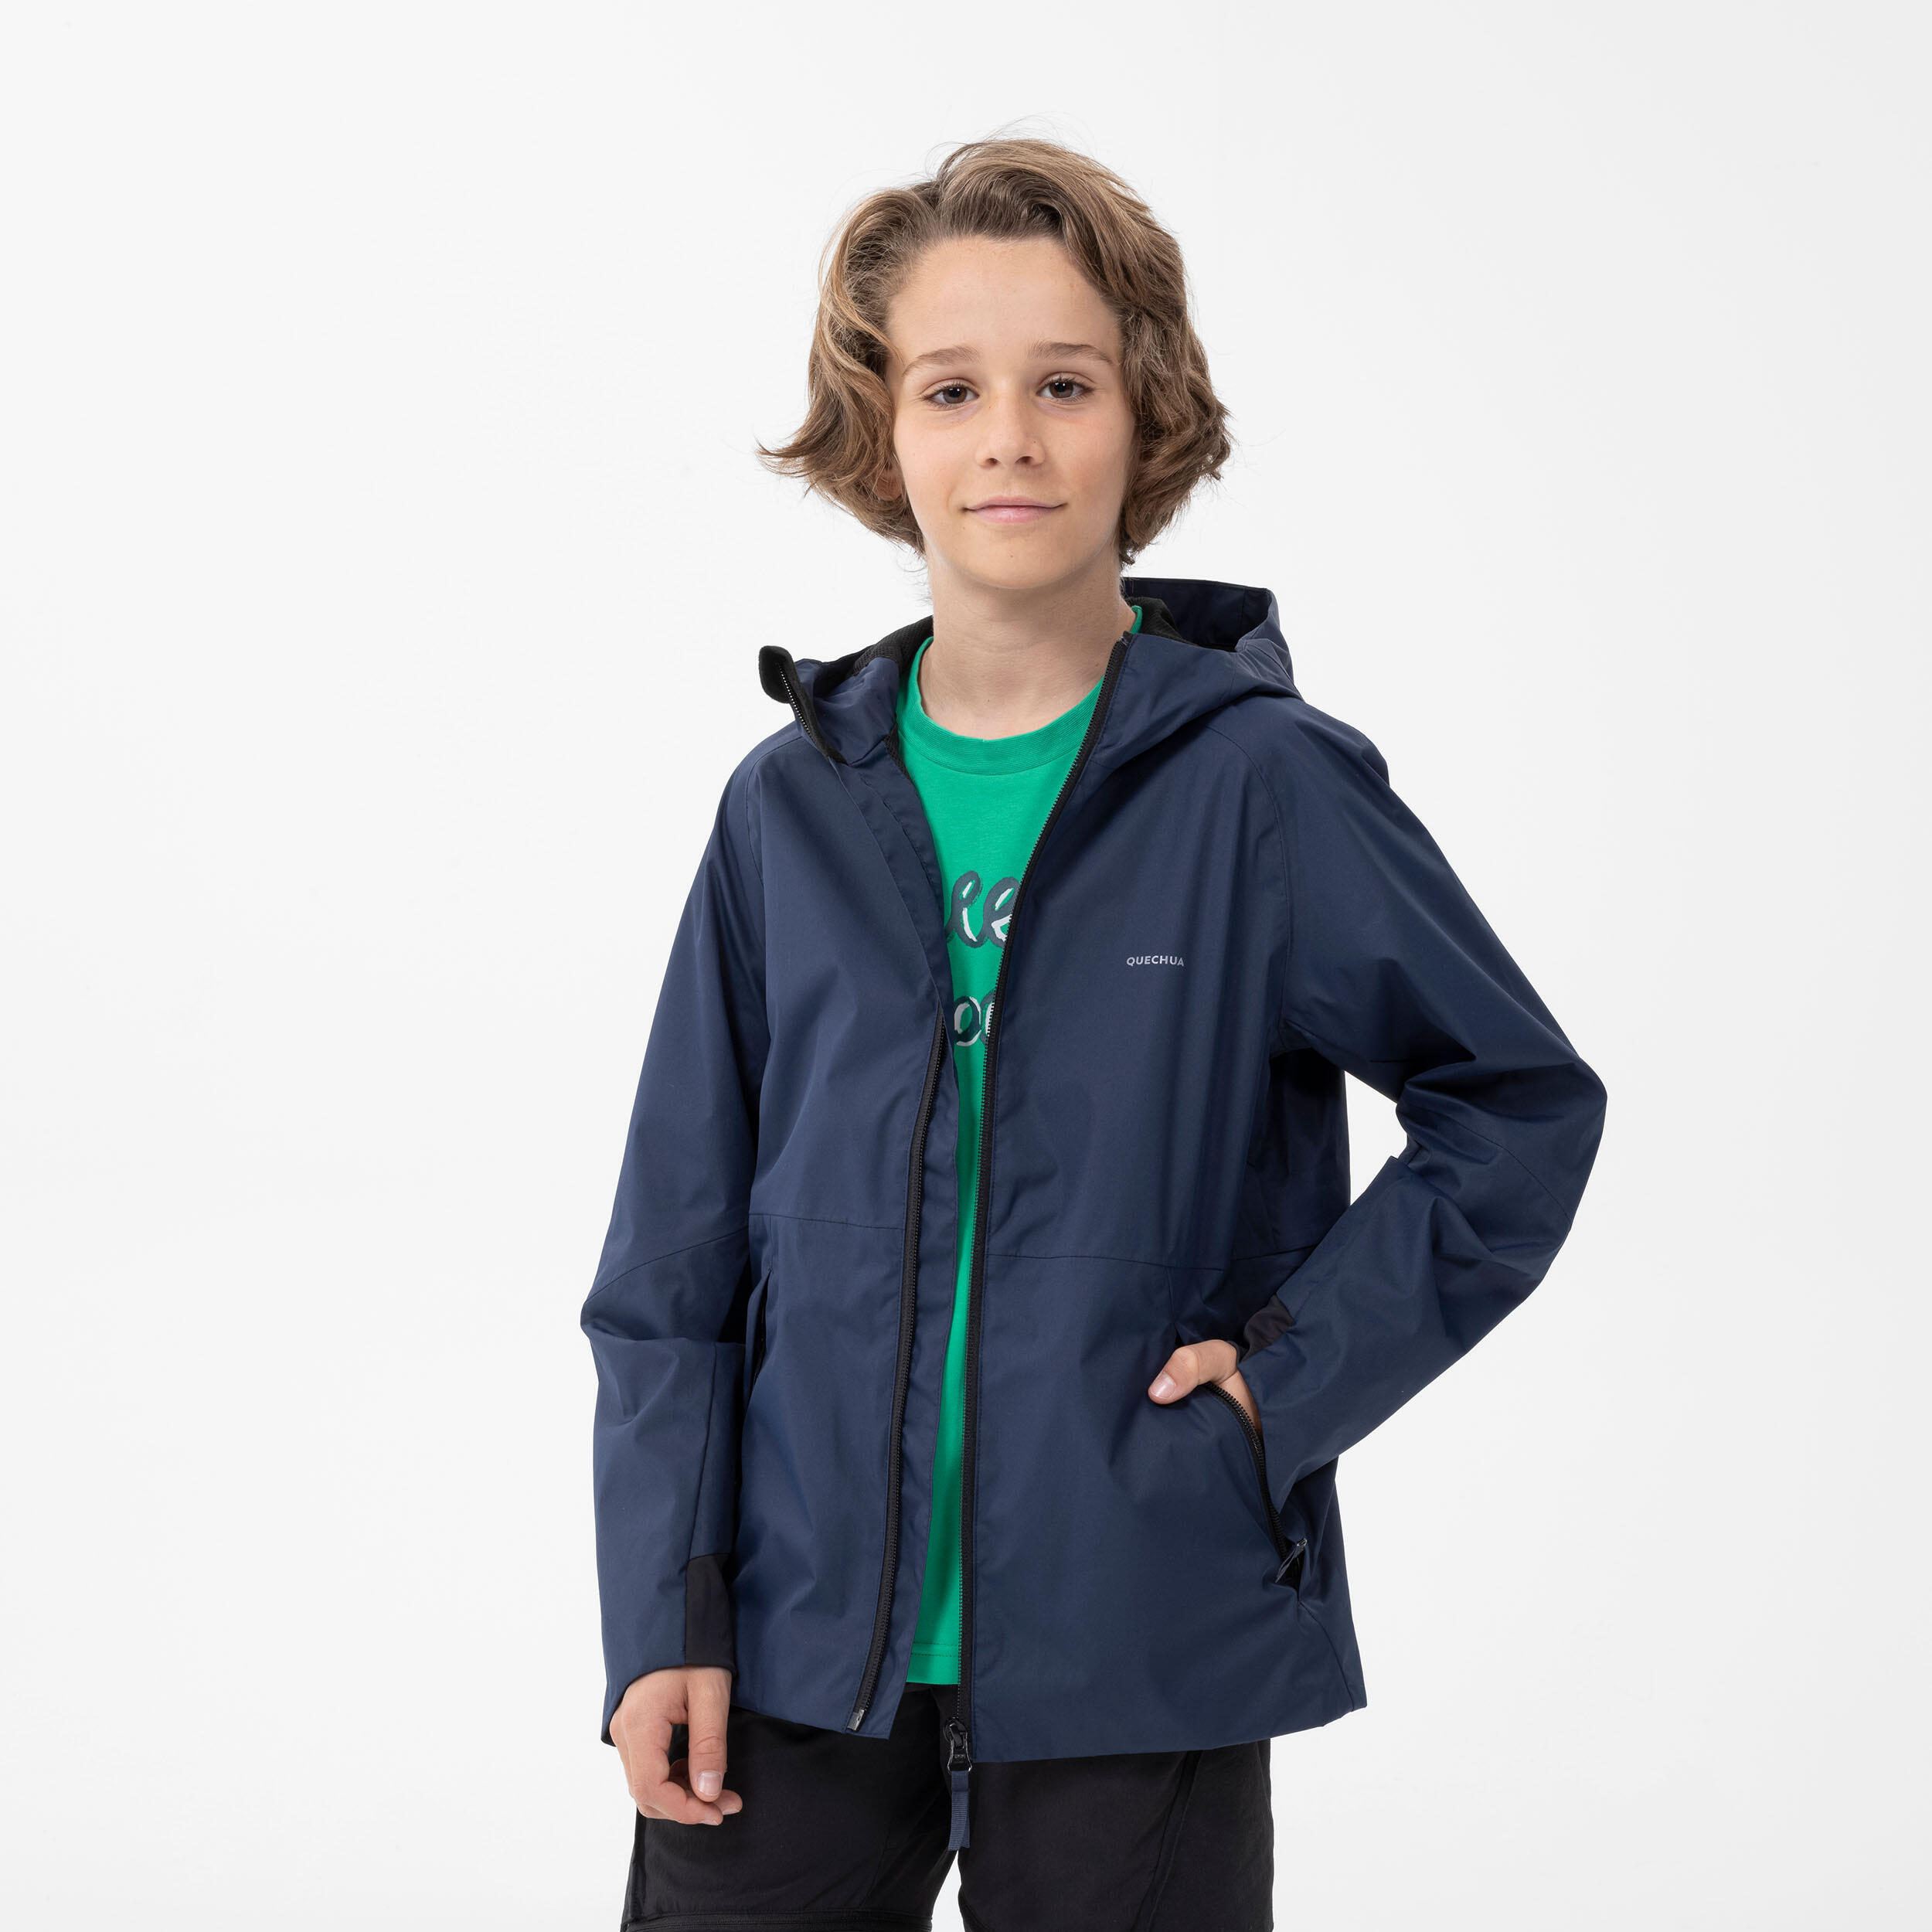 Kids’ Waterproof Hiking Jacket - MH500 Aged 7-15 - Navy Blue 6/9